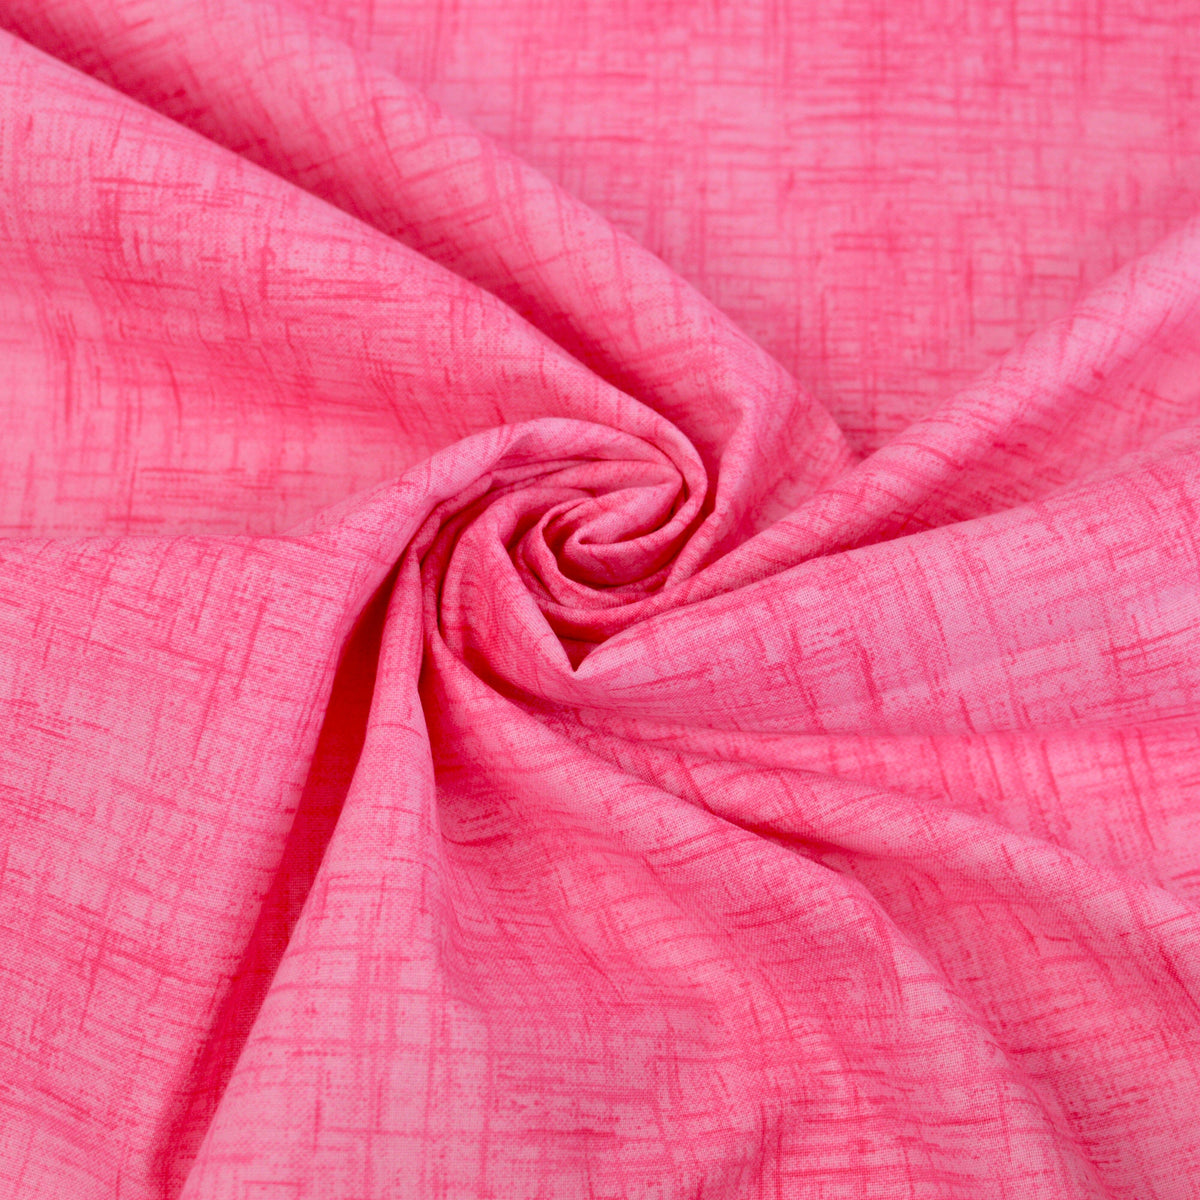 Baumwoll Cretonne - Webware mit Muster in Leinenoptik - pink Fabric poshpinks